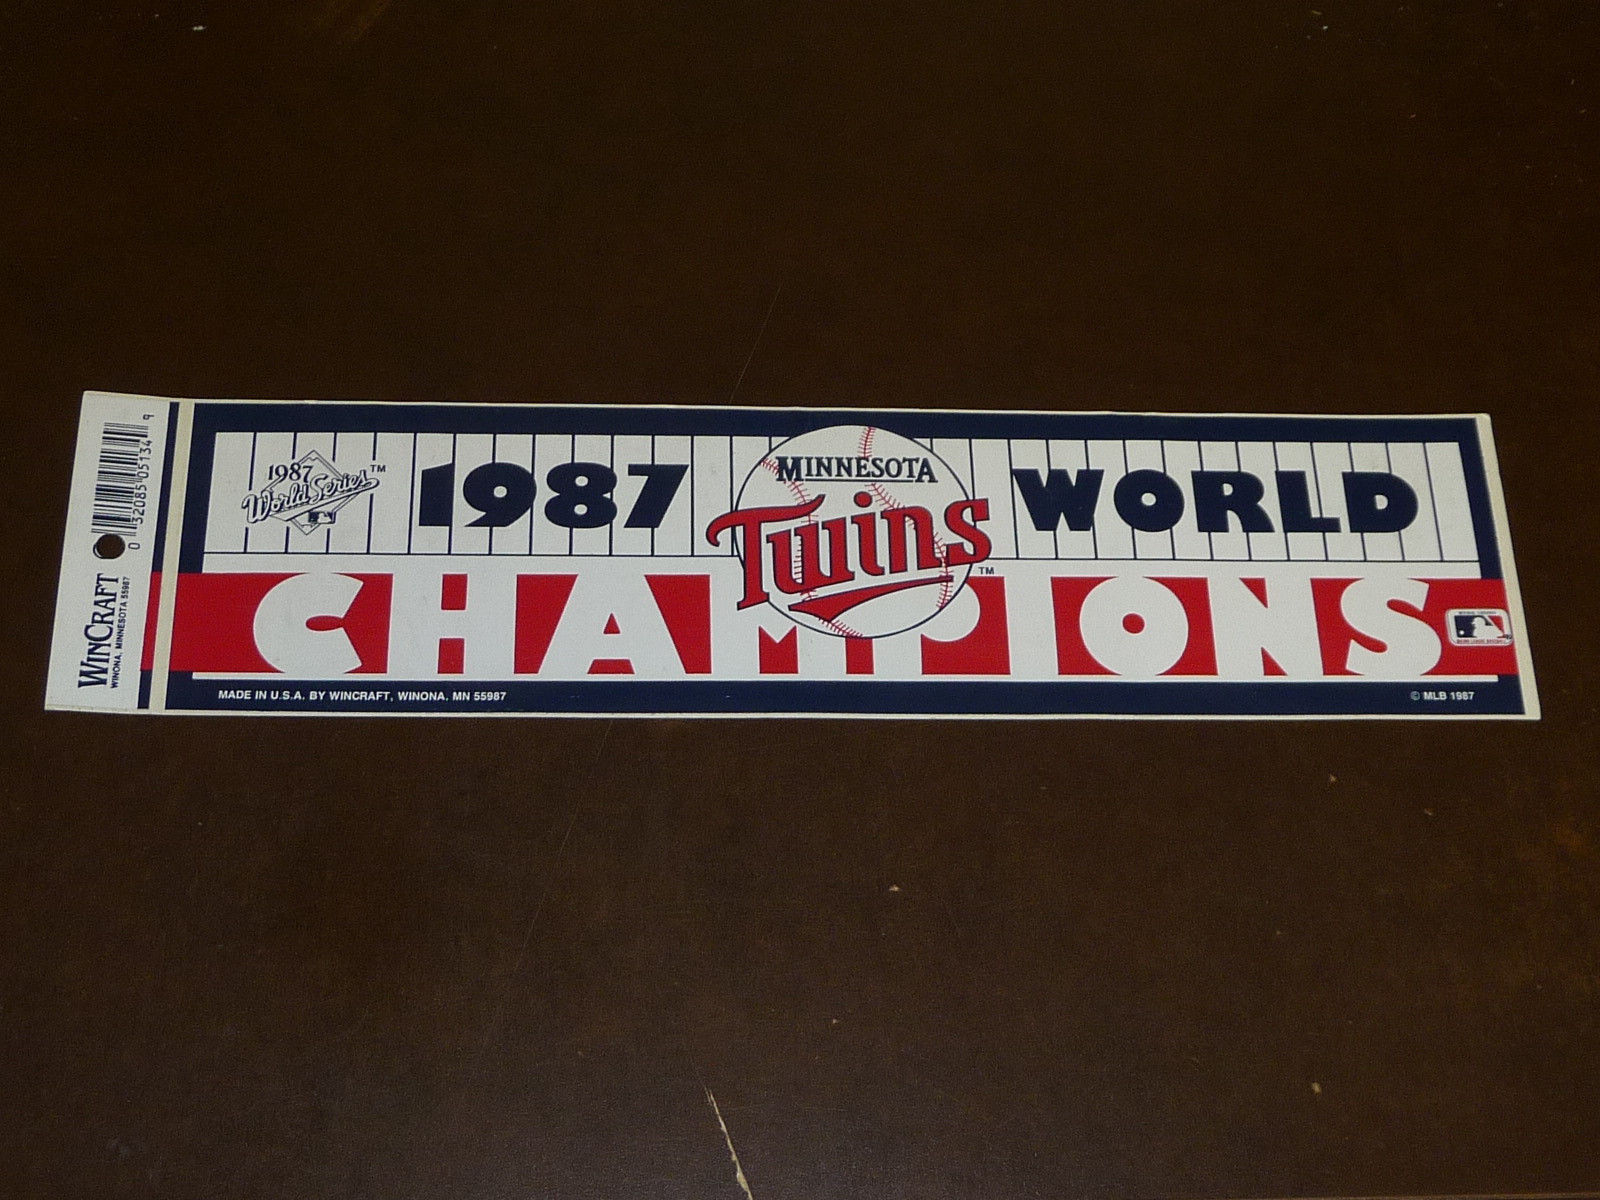 1987 MINNESOTA TWINS WORLD SERIES CHAMPIONS BUMPER STICKER VERY COLORFUL!